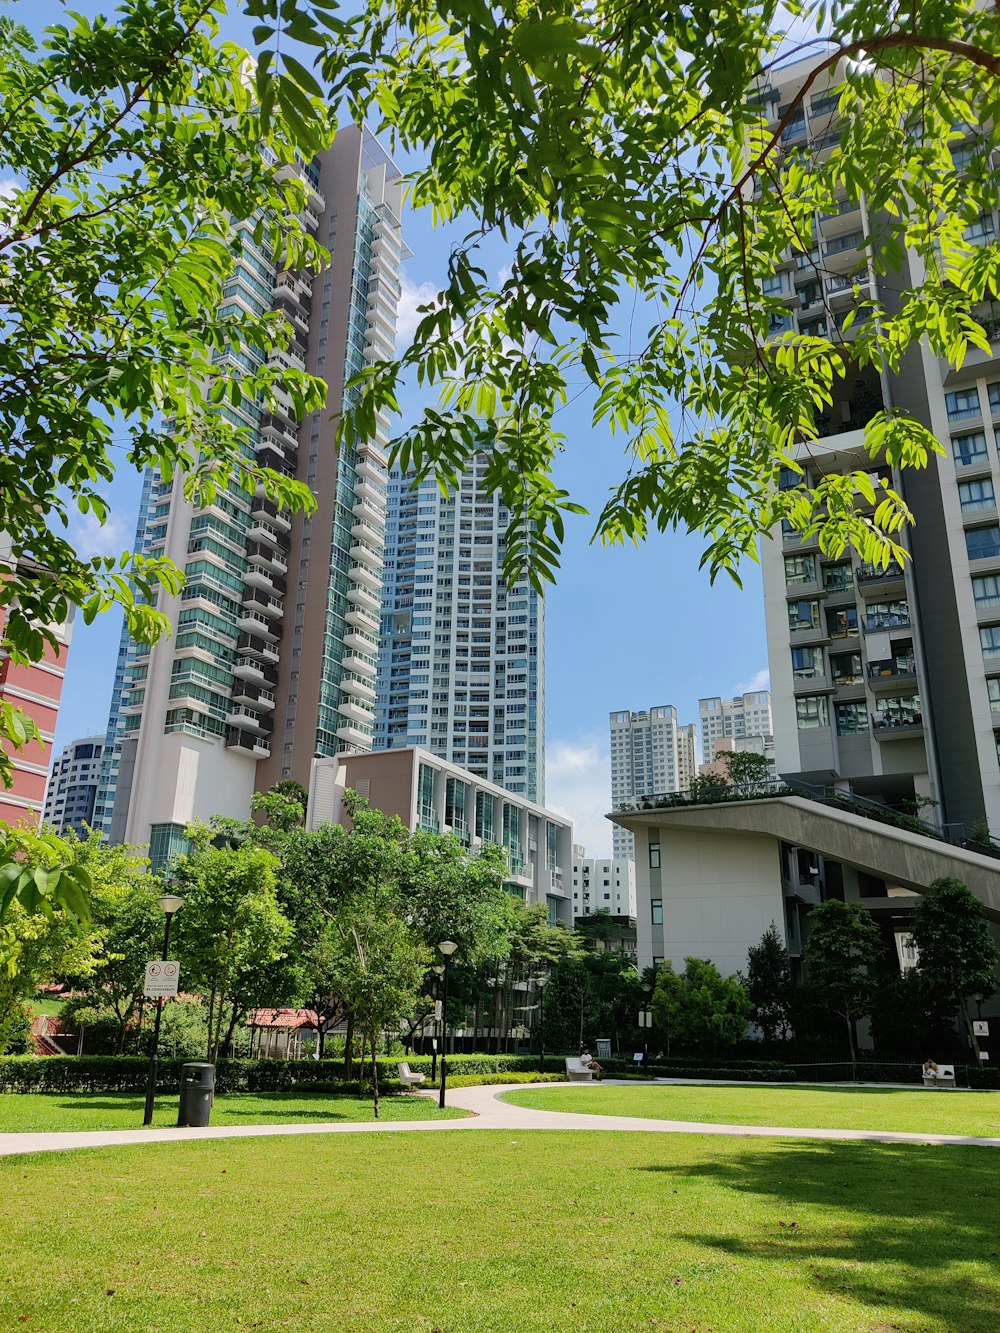 Campo de grama verde perto do edifício de concreto branco durante o dia